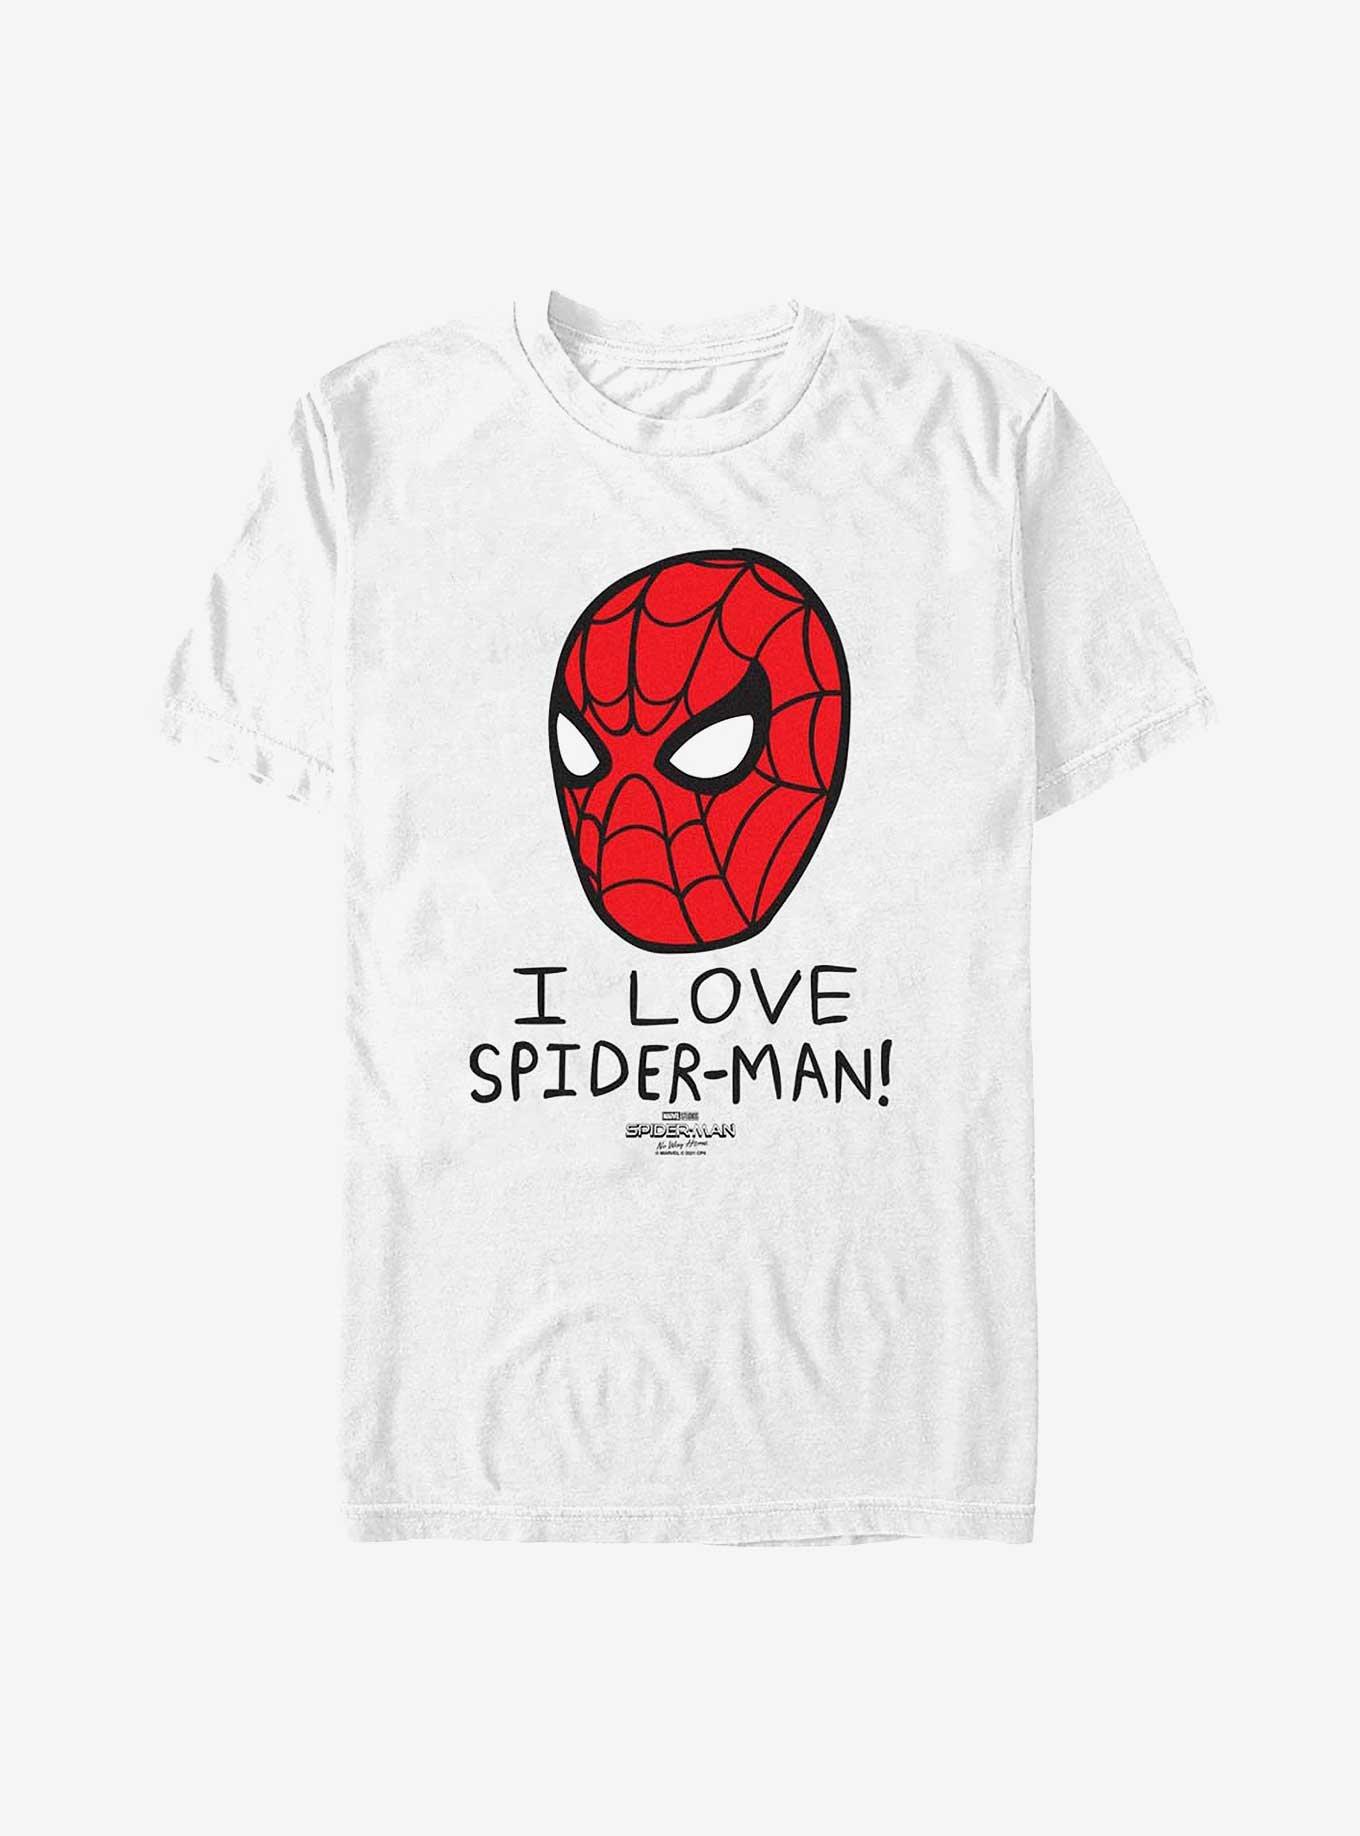 Total 76+ imagen i love spiderman shirt